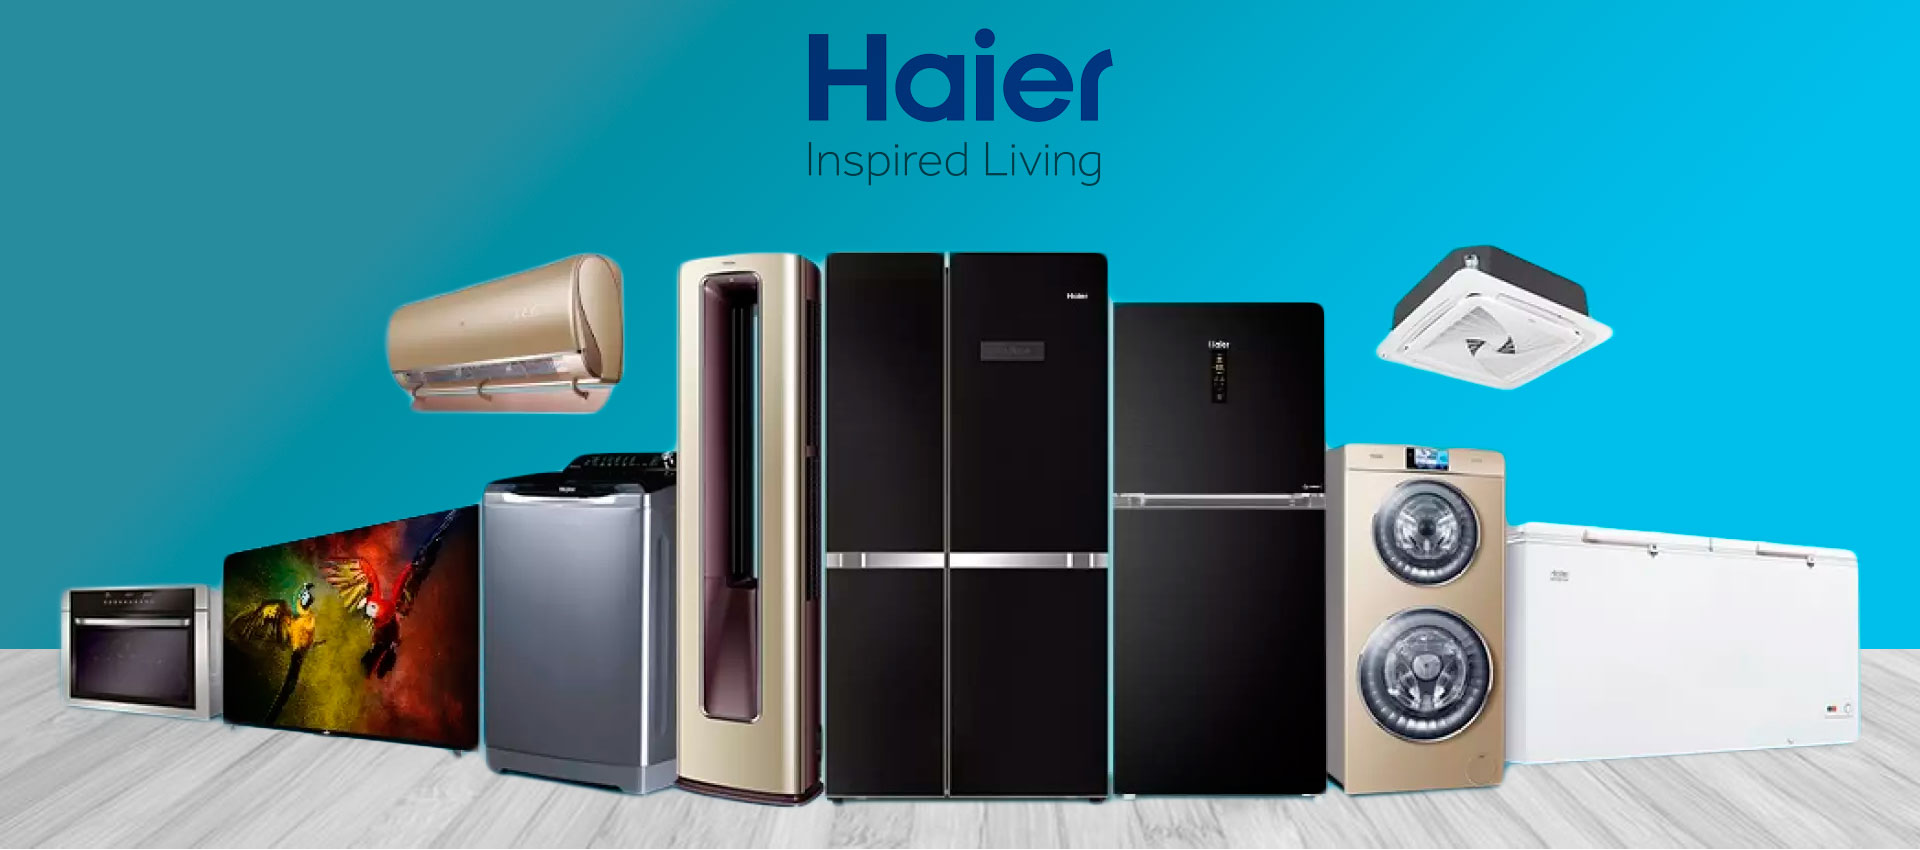 Haier Pakistan - Providing the best appliances in 2020